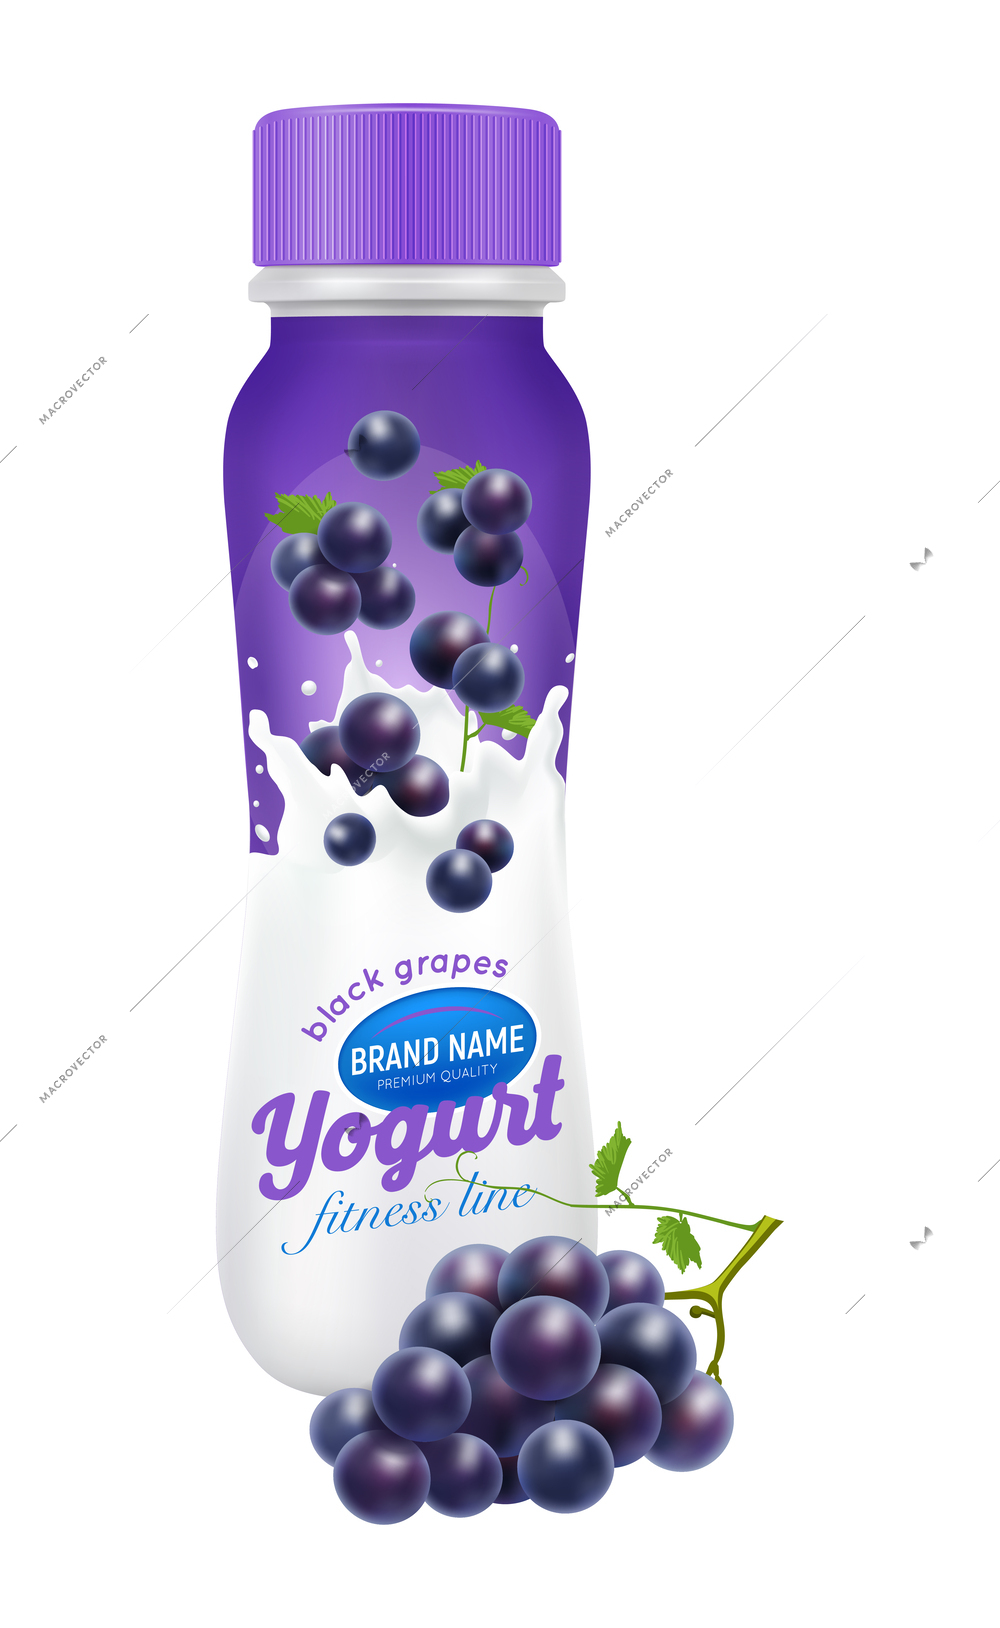 Drinkable yogurt with black grapes realistic bottle design template vector illustration